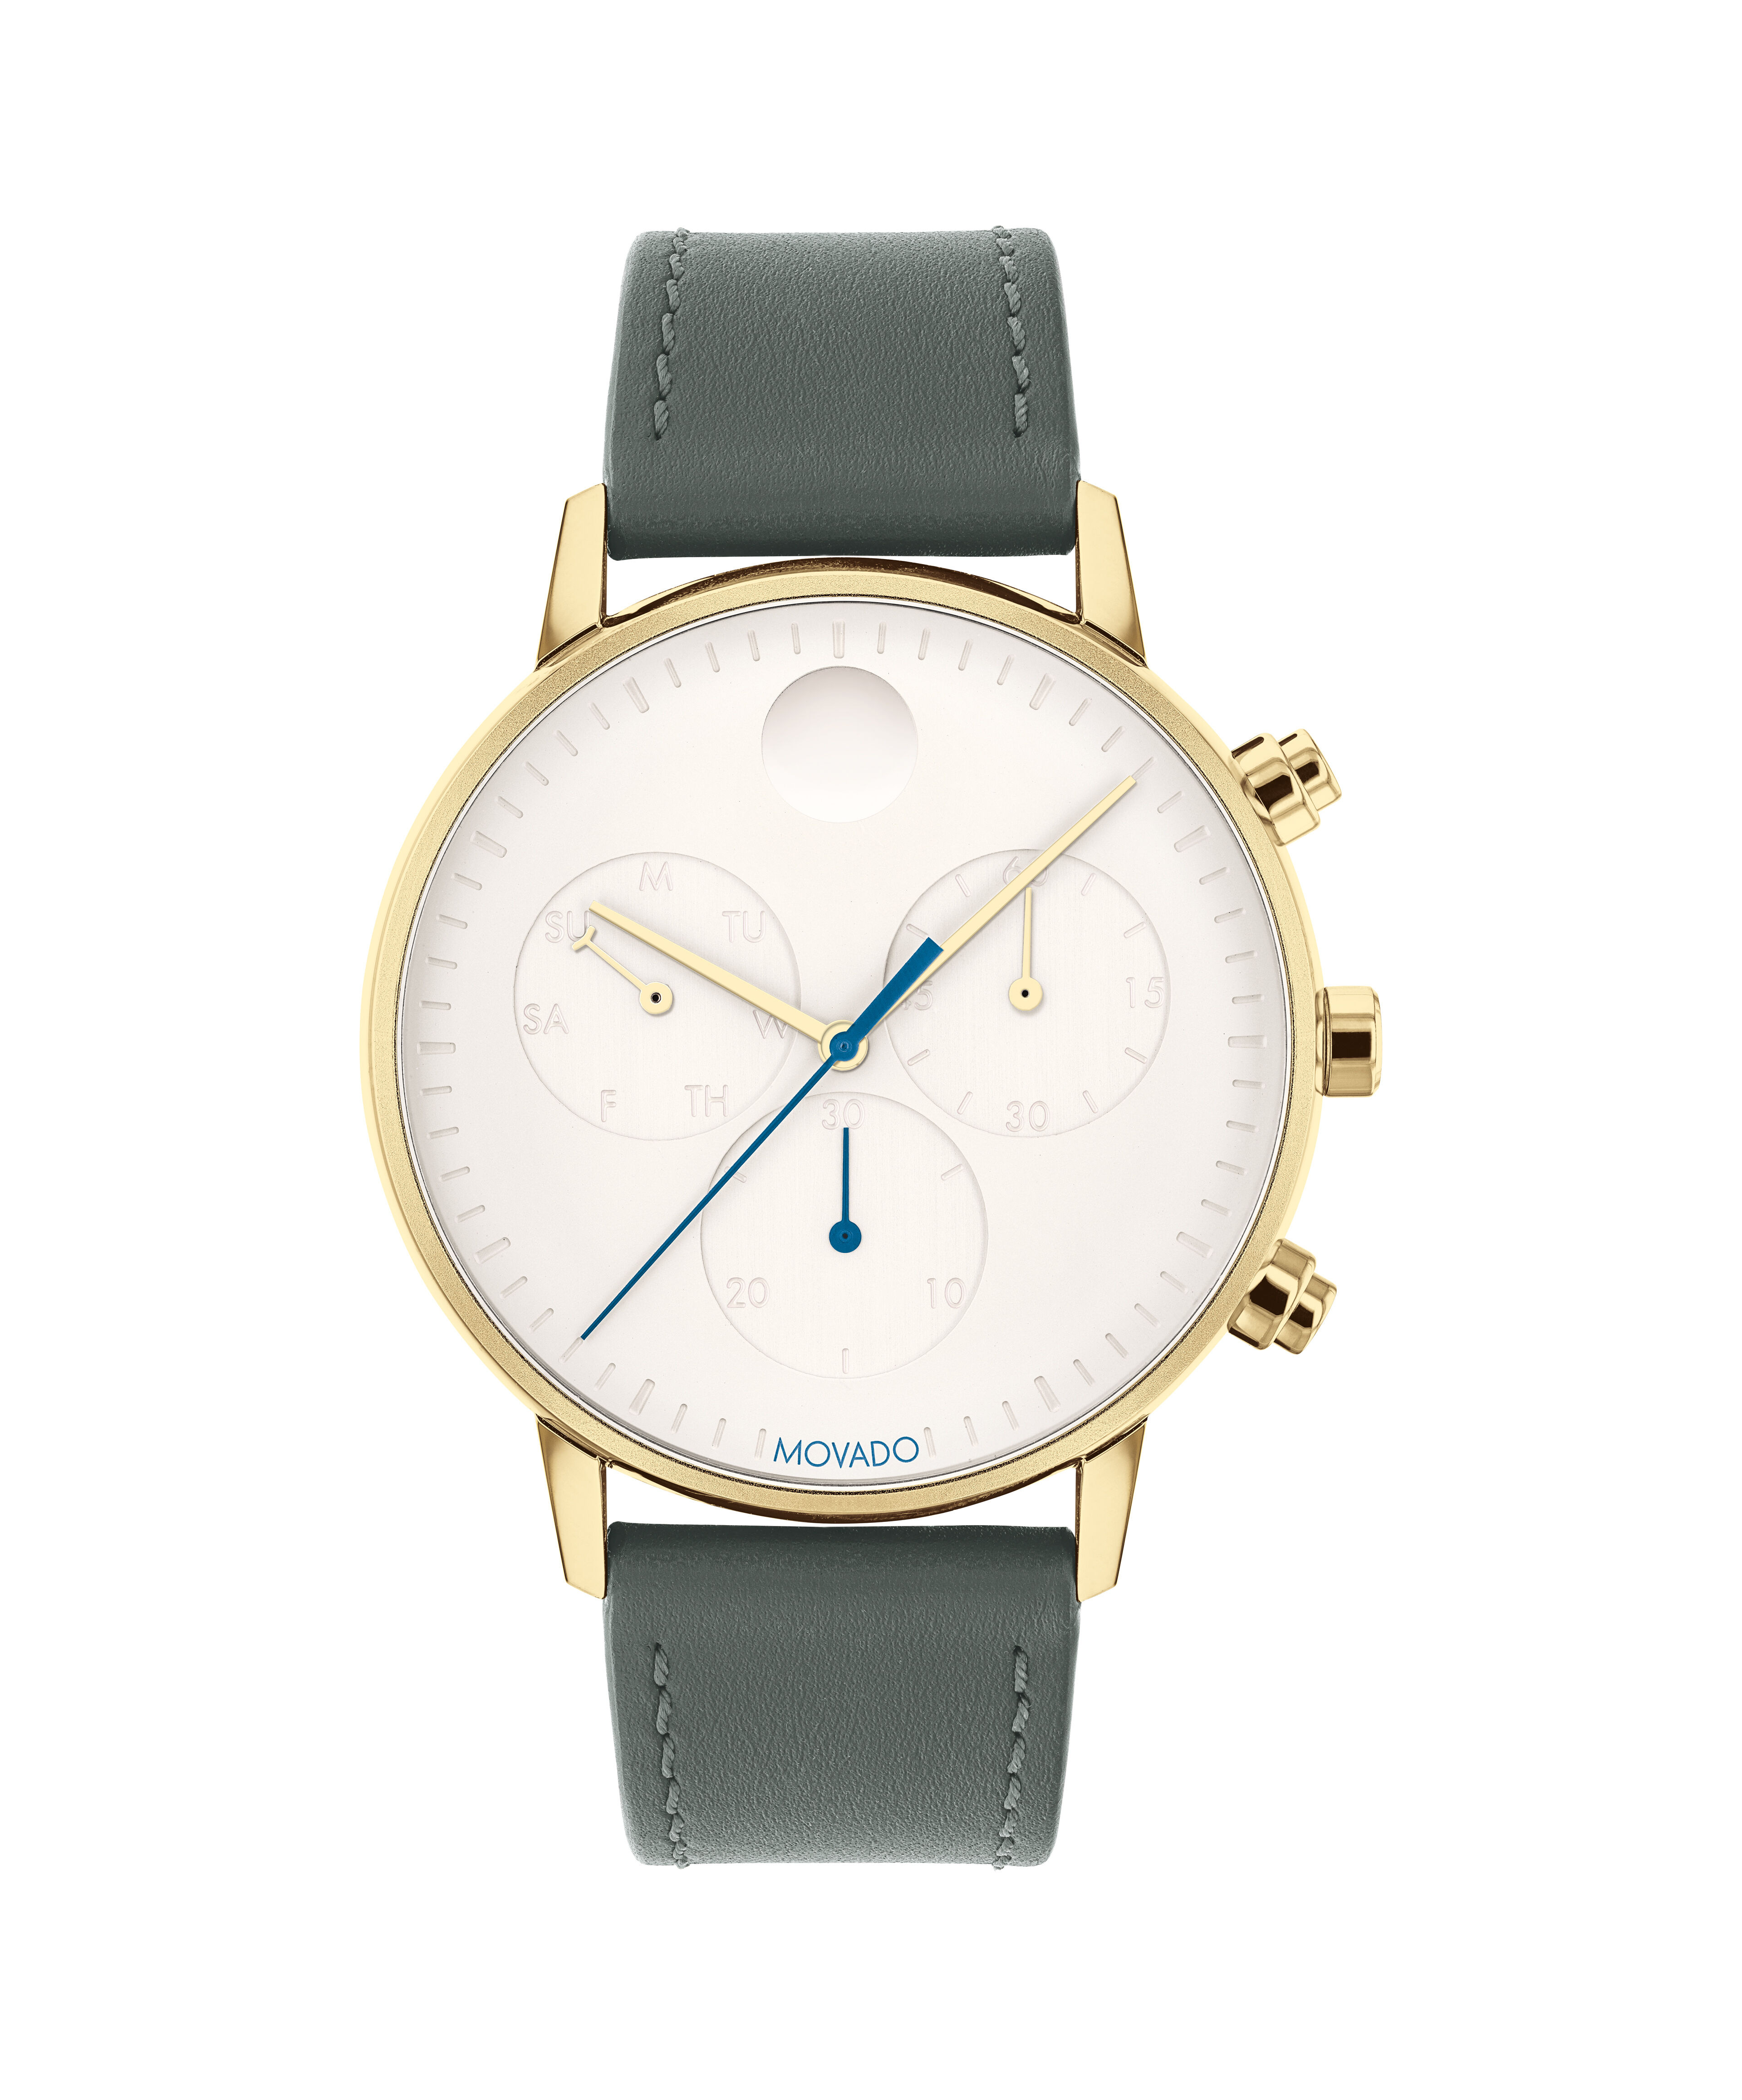 Cartier Replica Watch Review